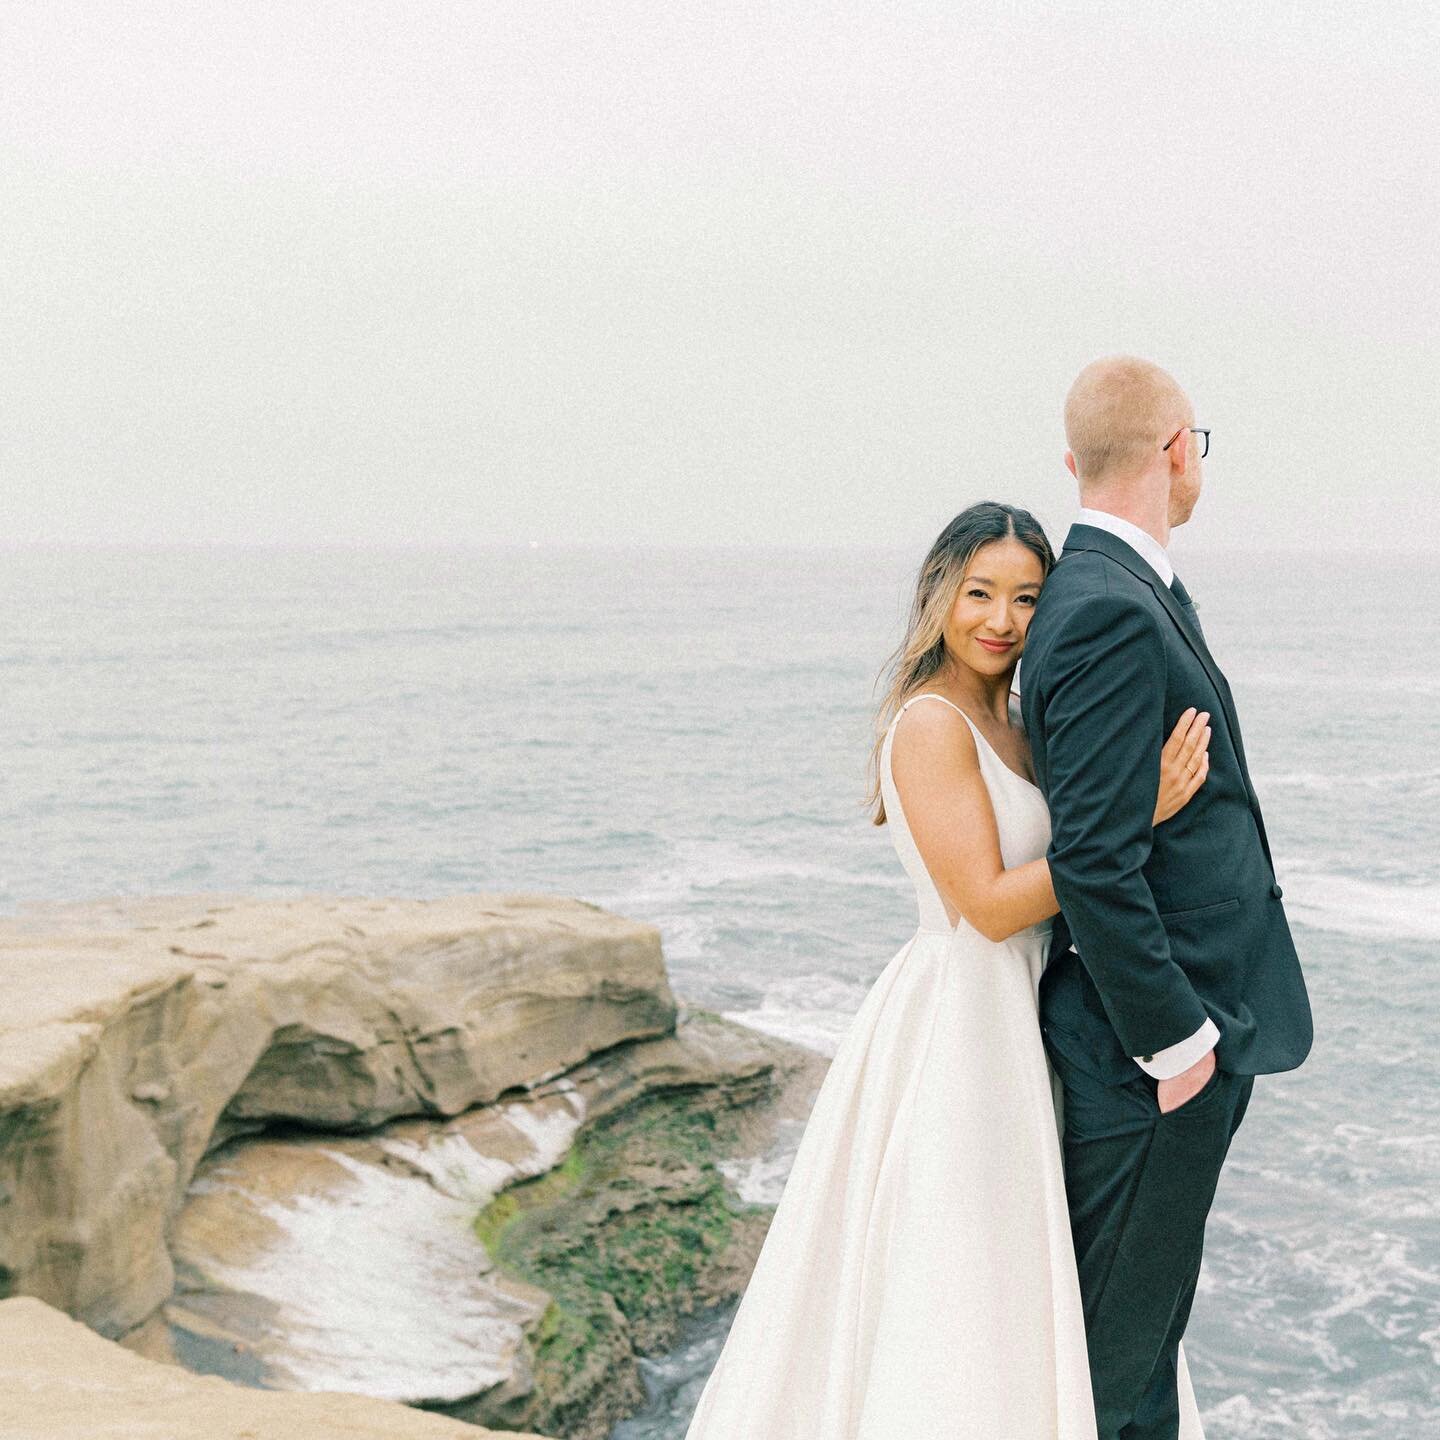 two souls united against the endless ocean 💗🌊

#intimatewedding #weddingsonthewater #sandiego #sunsetcliffs